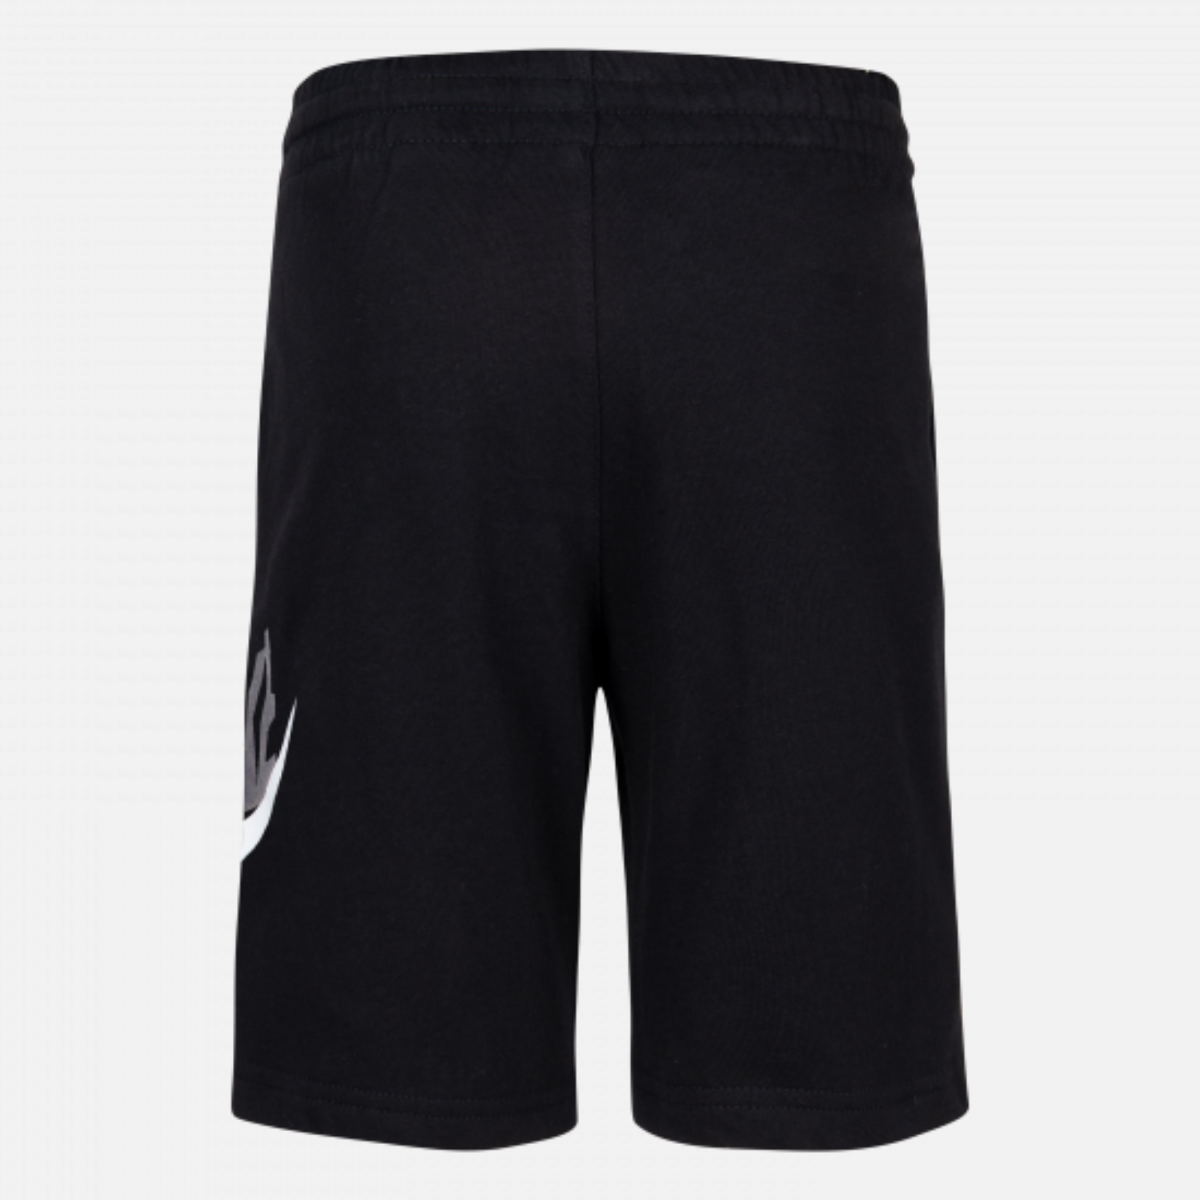 Short Nike Sportswear HBR Enfant - Noir/Gris/Blanc